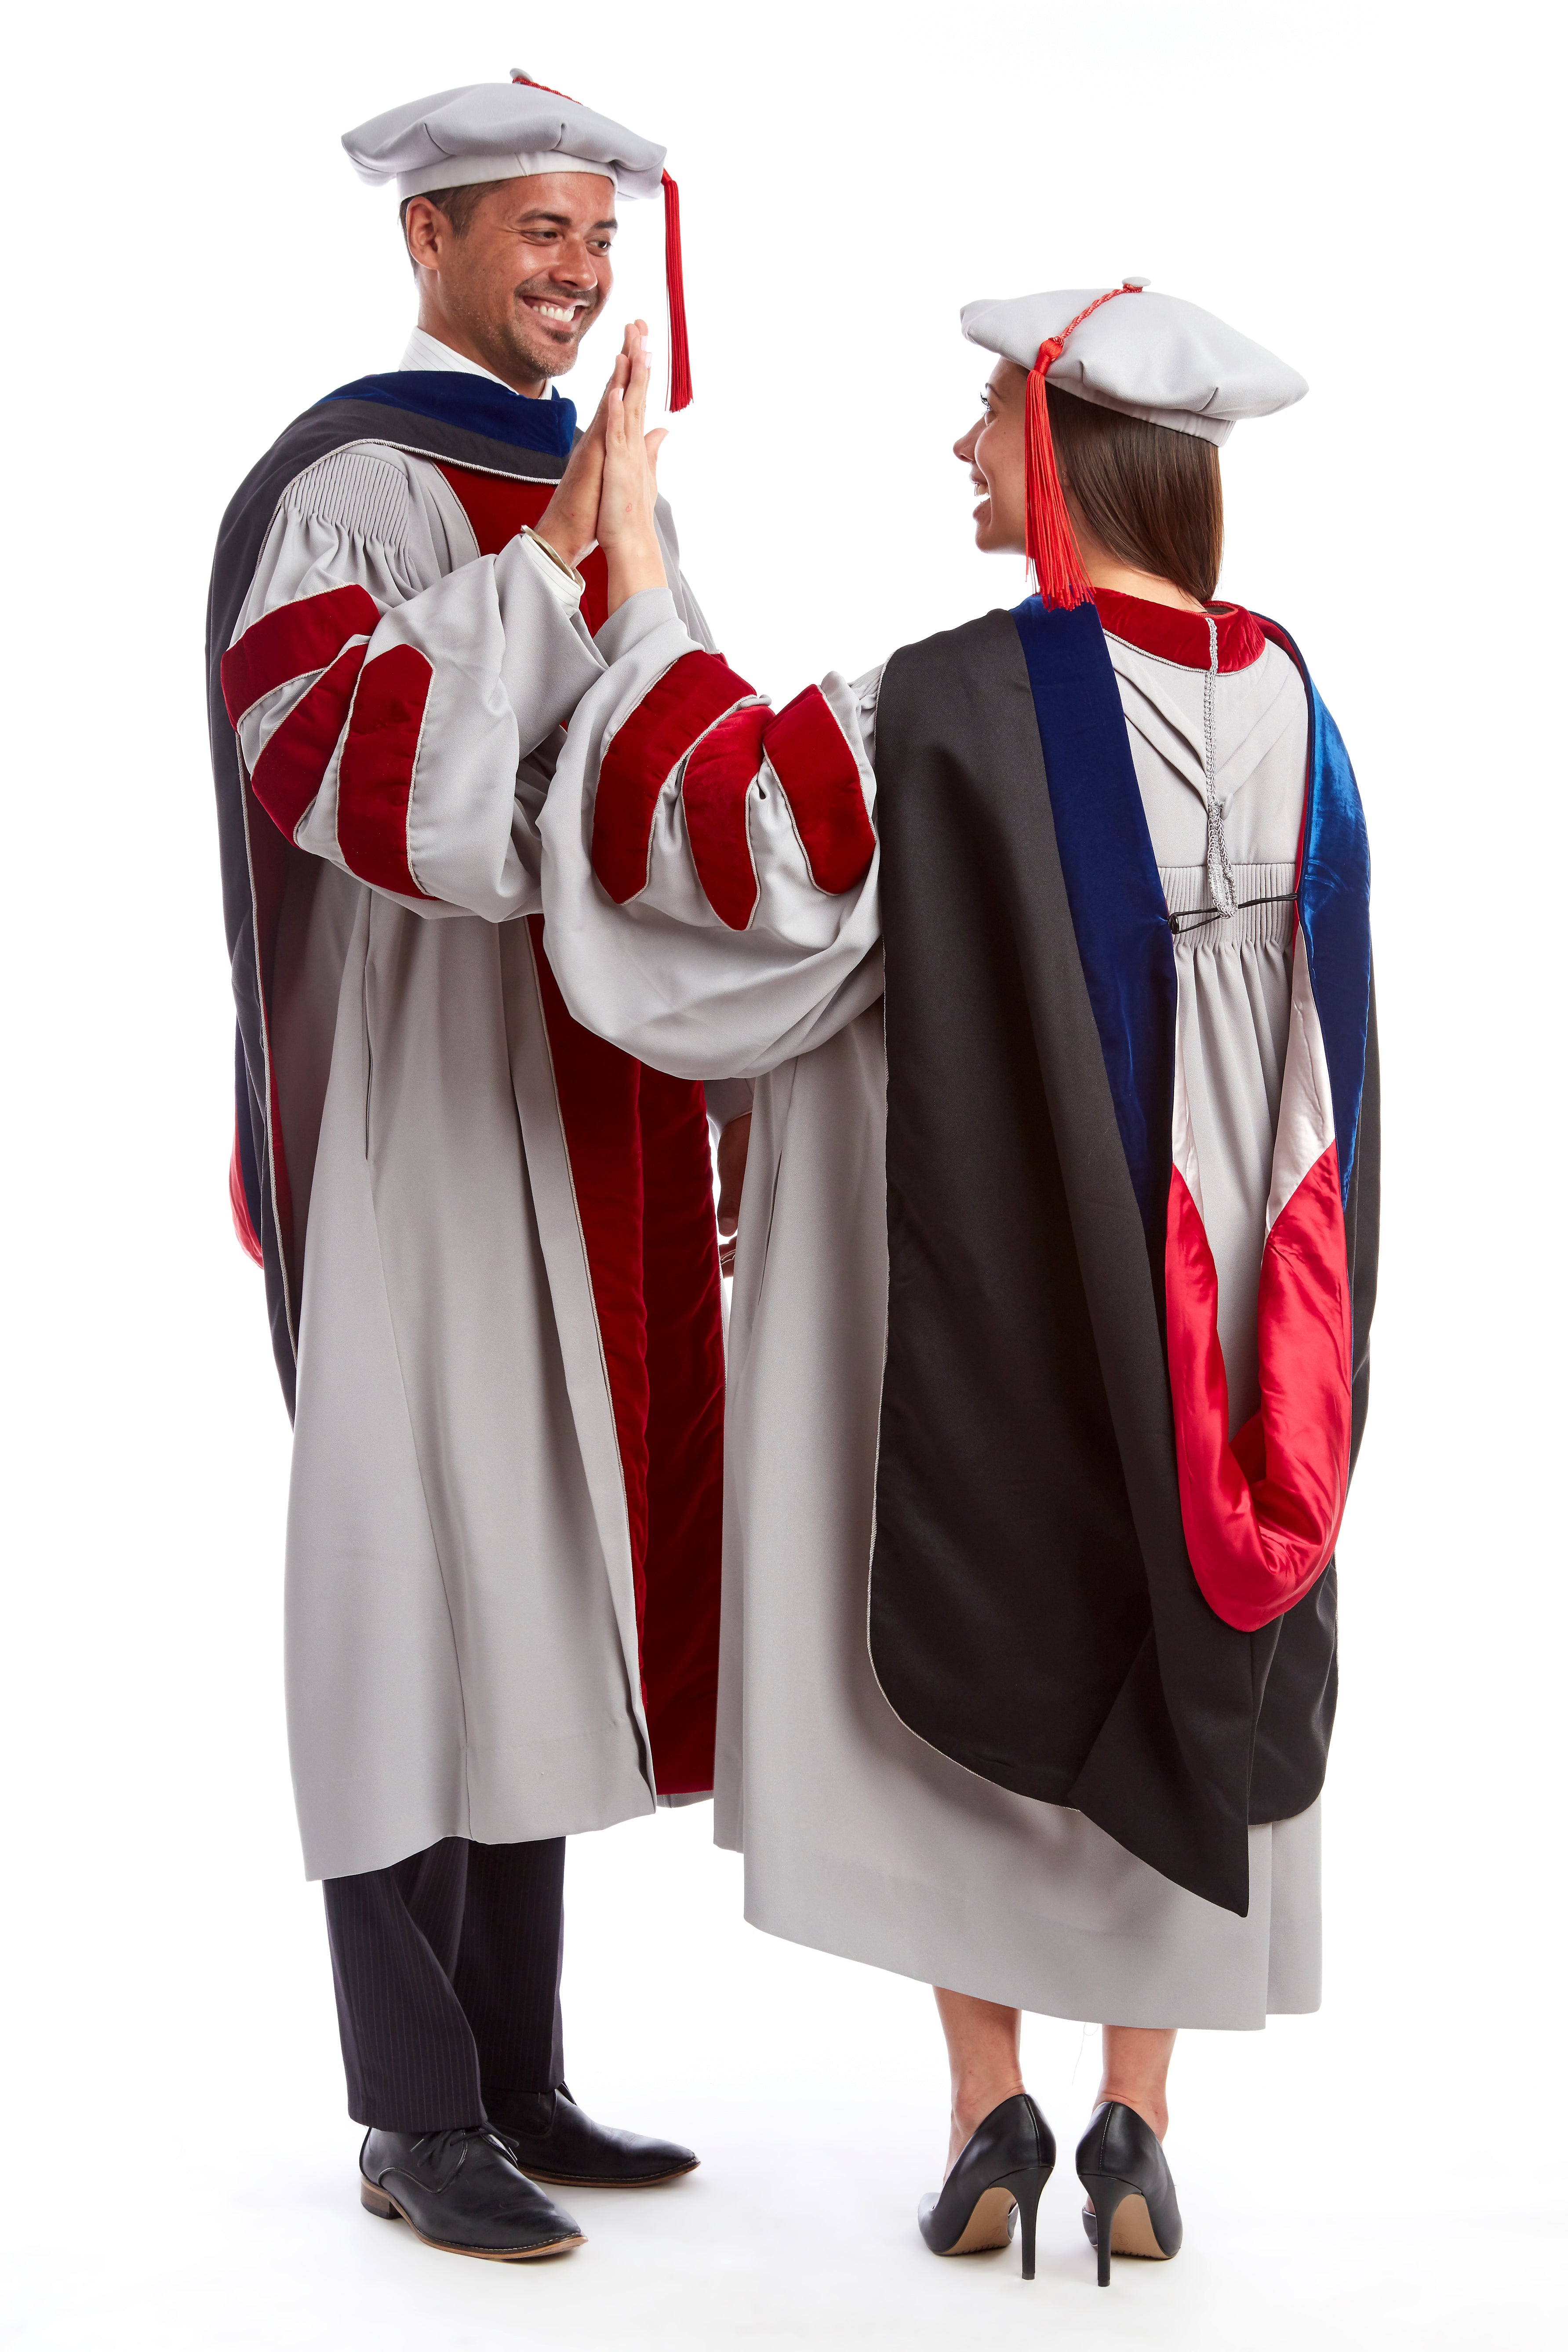 Graduation picture | Cap and gown senior pictures, Graduation photography  poses, Cap and gown